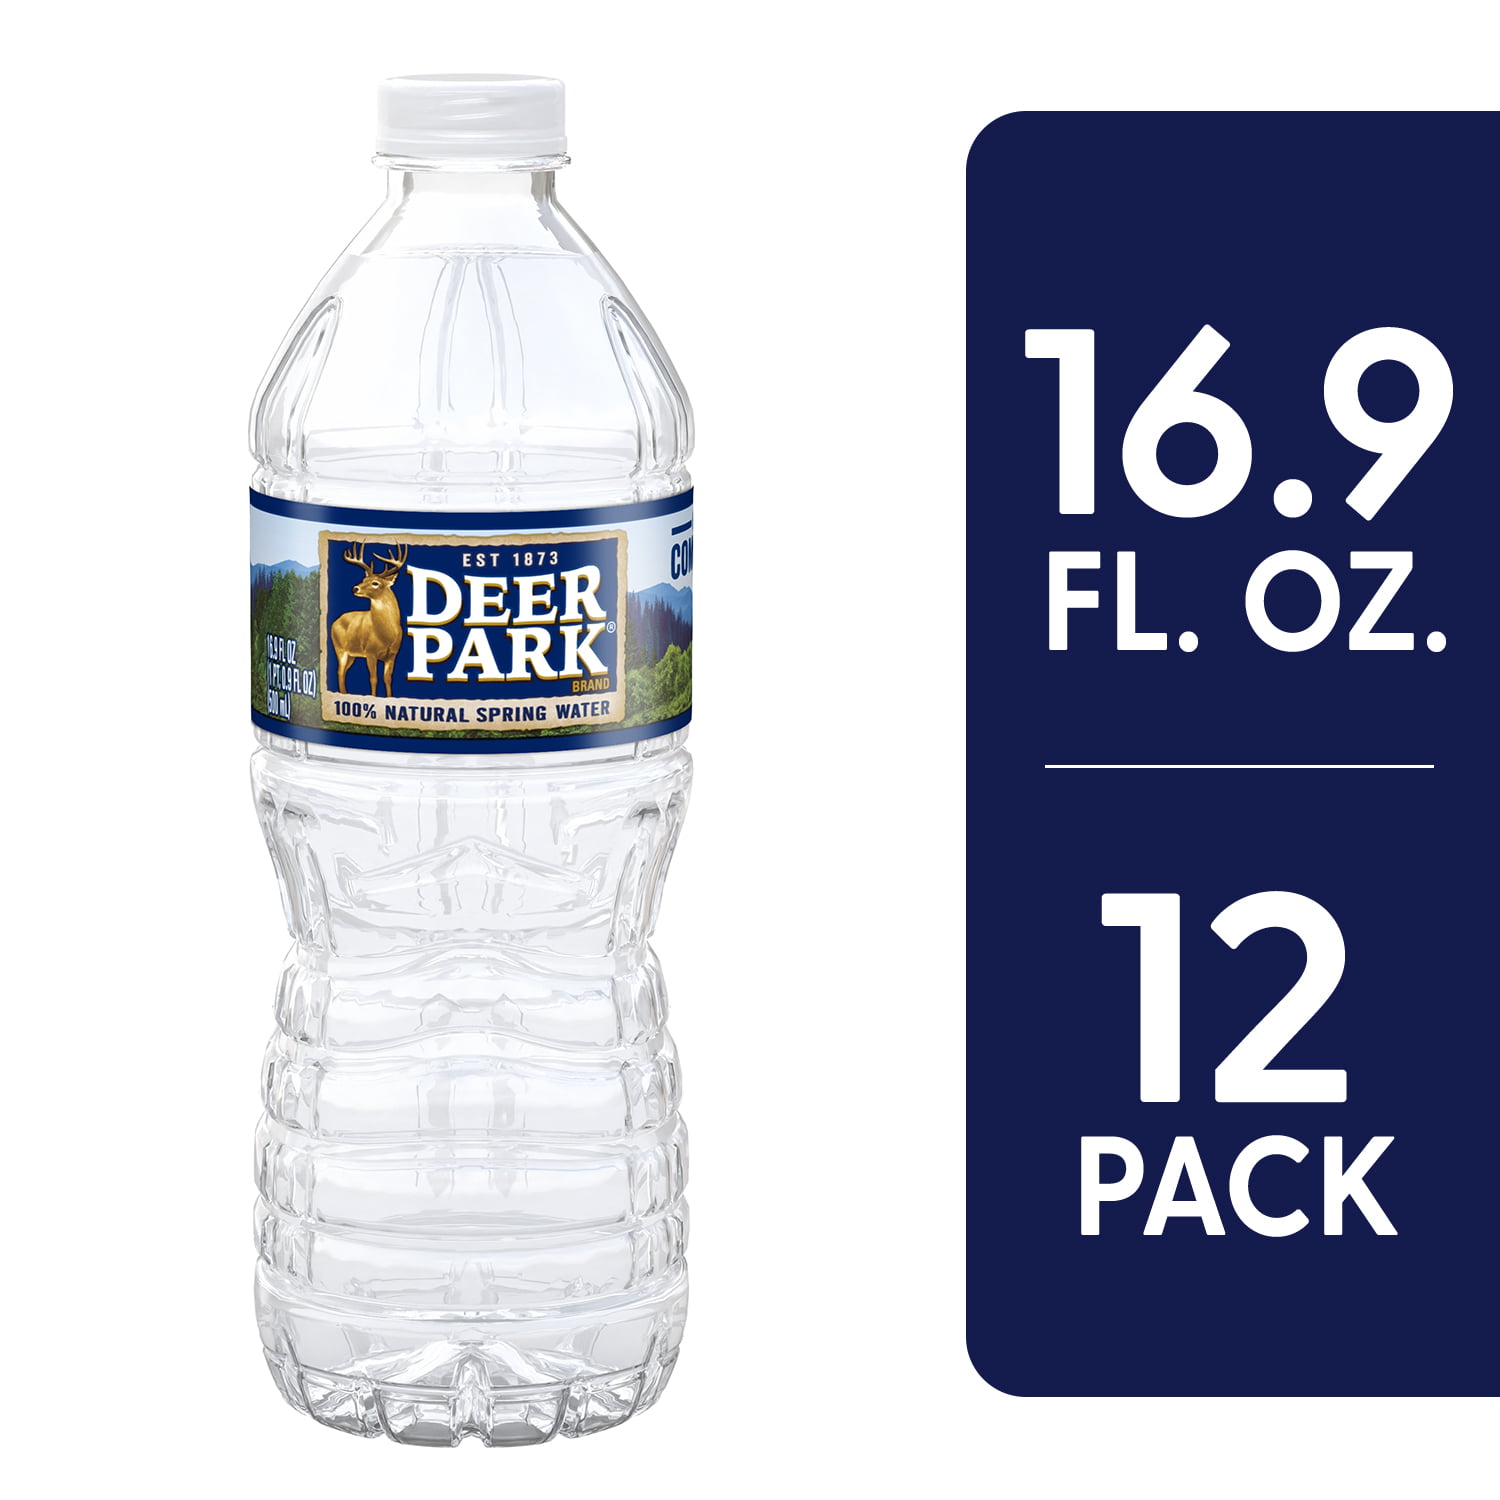 deer-park-brand-100-natural-spring-water-16-9-ounce-plastic-bottles